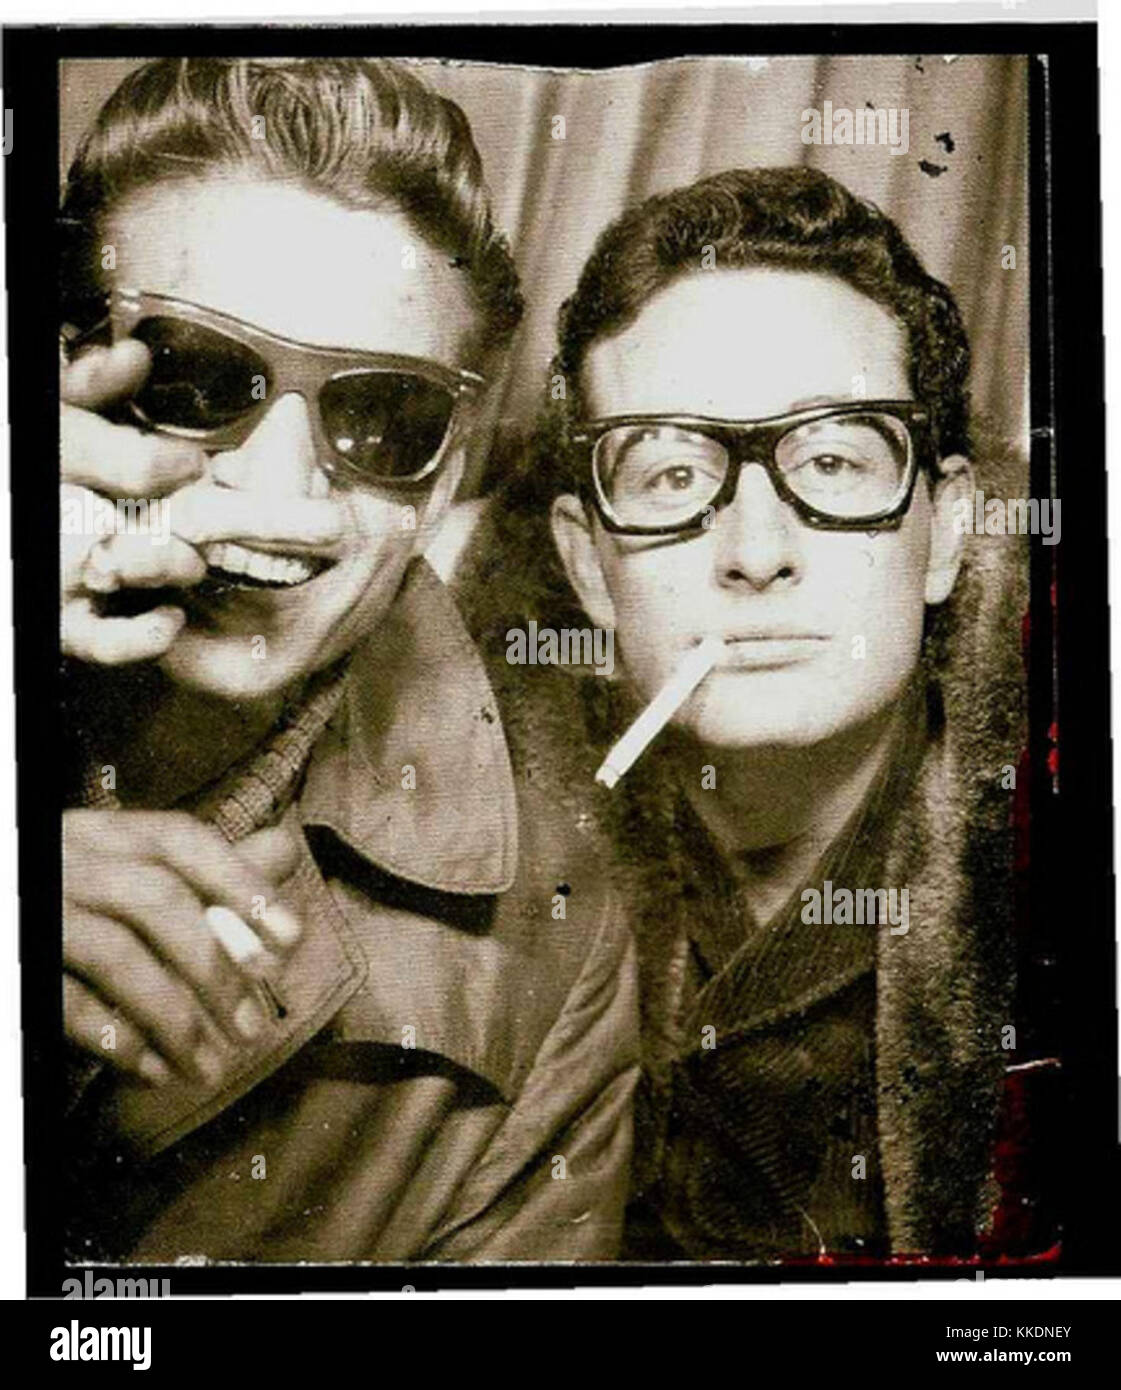 Waylon Jennings and Buddy Holly in 1959 - 2 Stock Photo